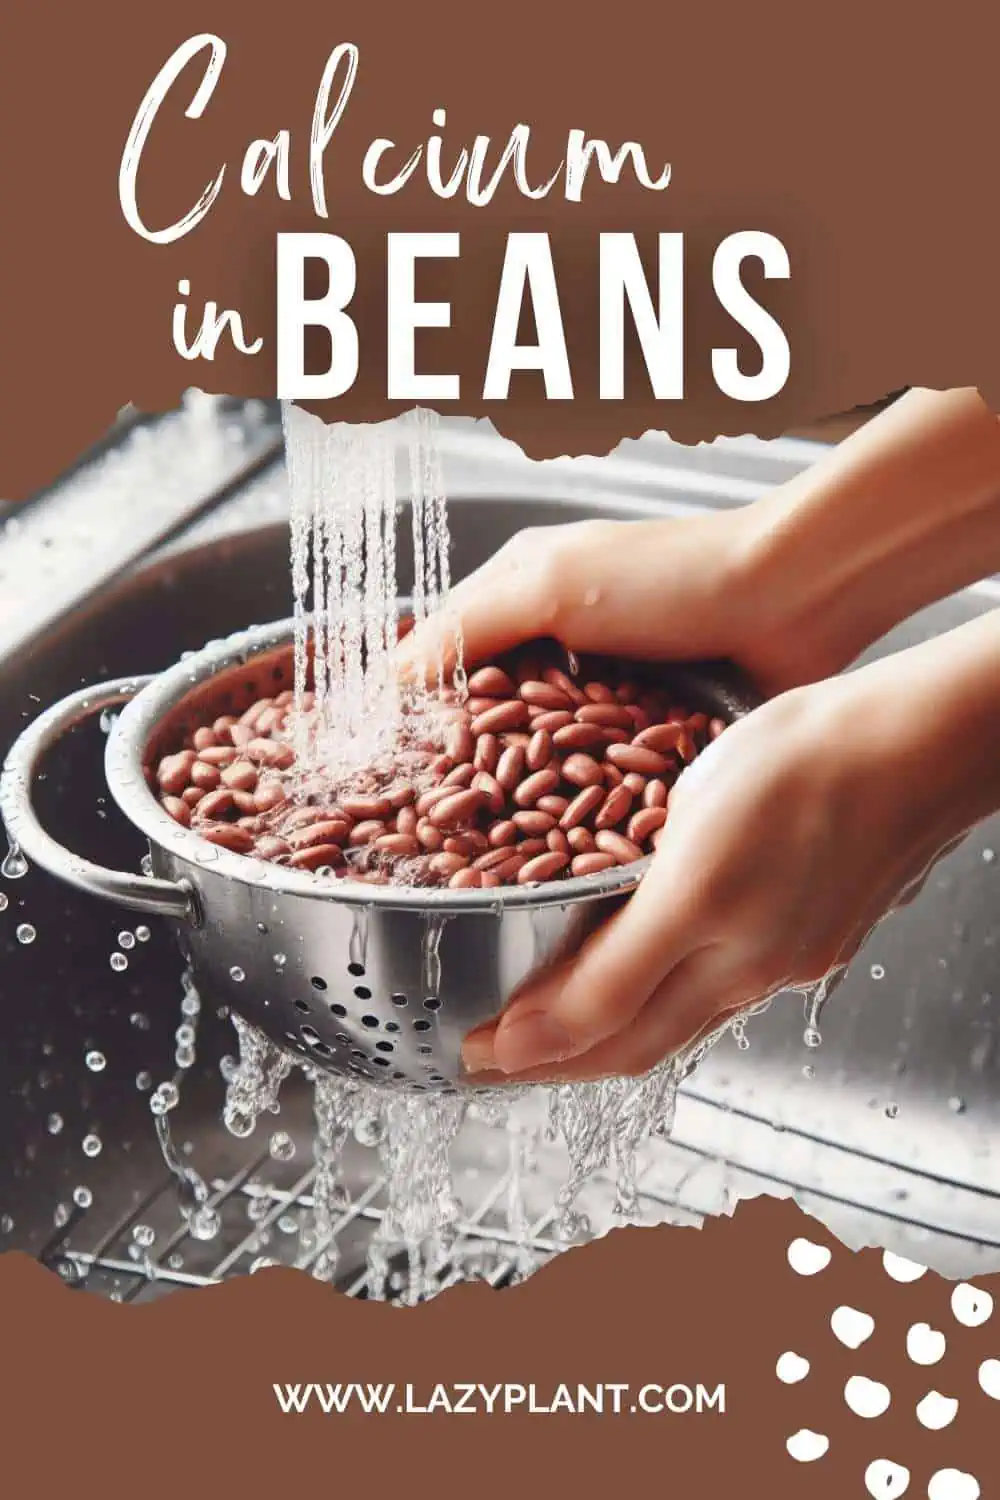 How much calcium in beans?